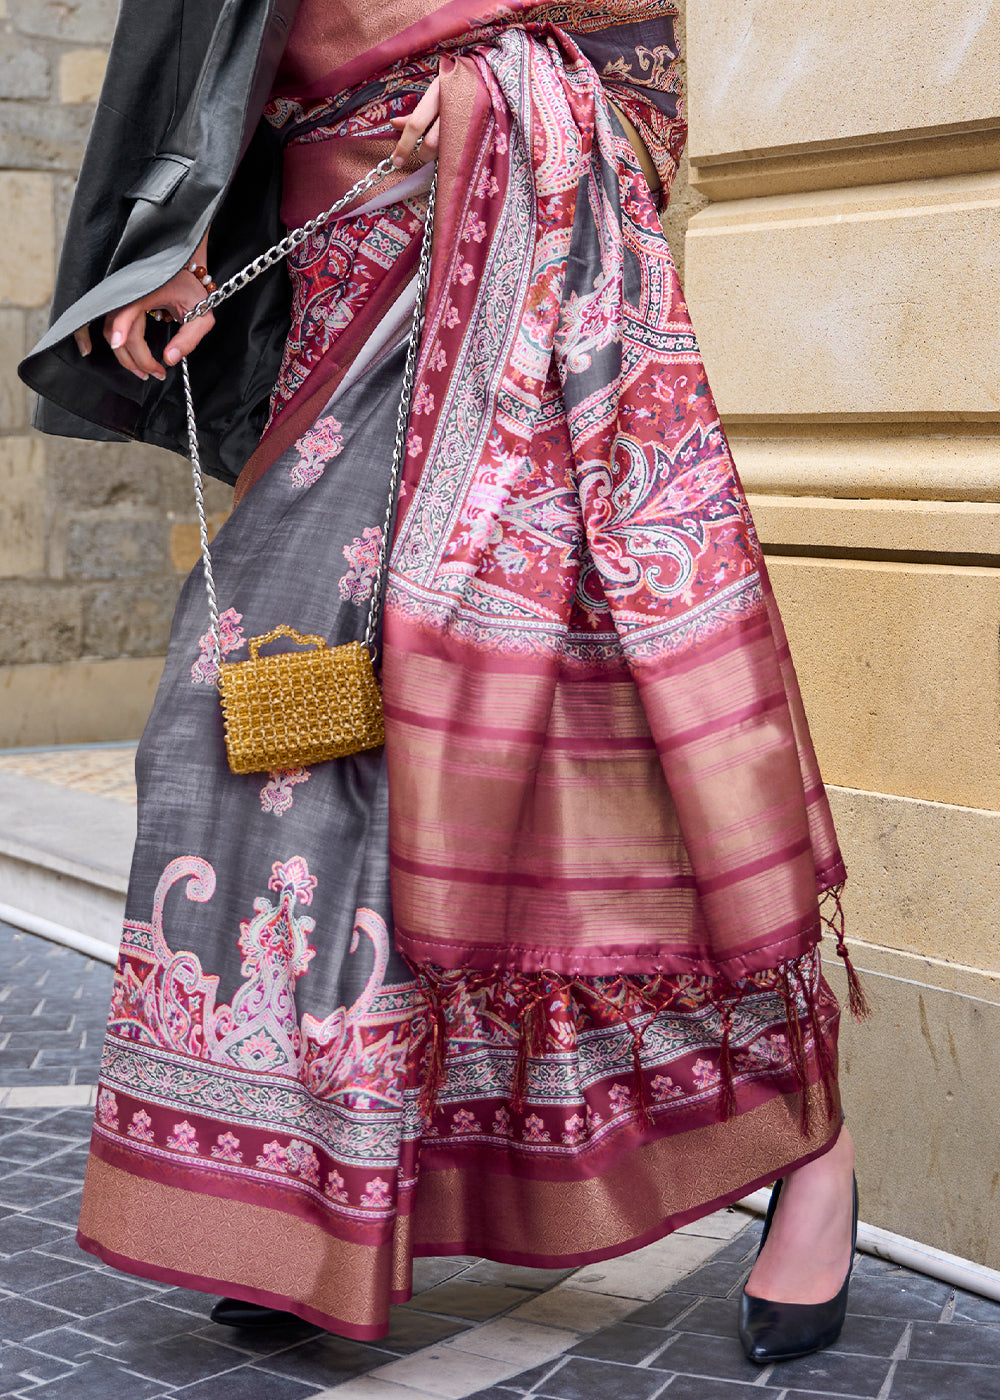 Grey & Pink Digital Floral Printed Silk Saree - Colorful Saree